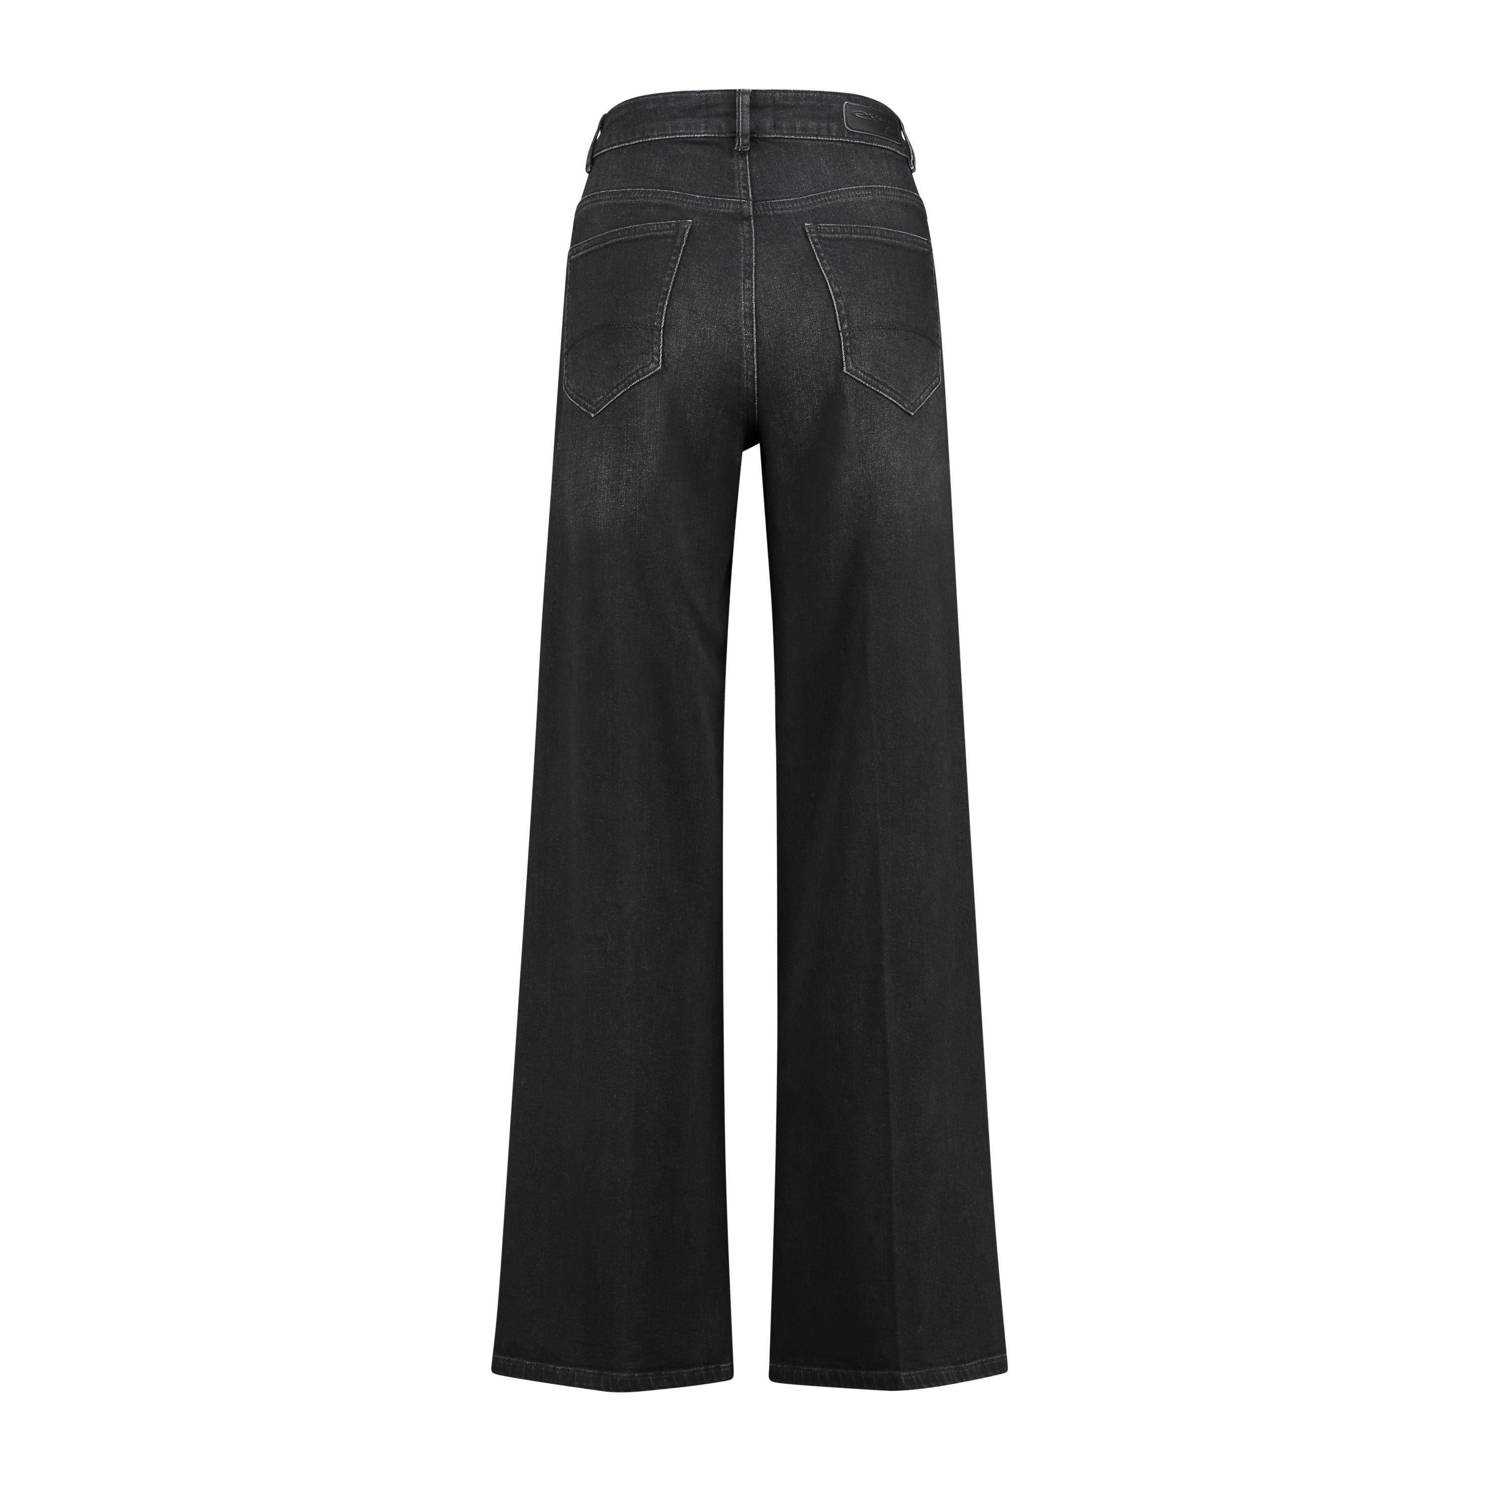 Expresso high waist wide leg jeans black denim